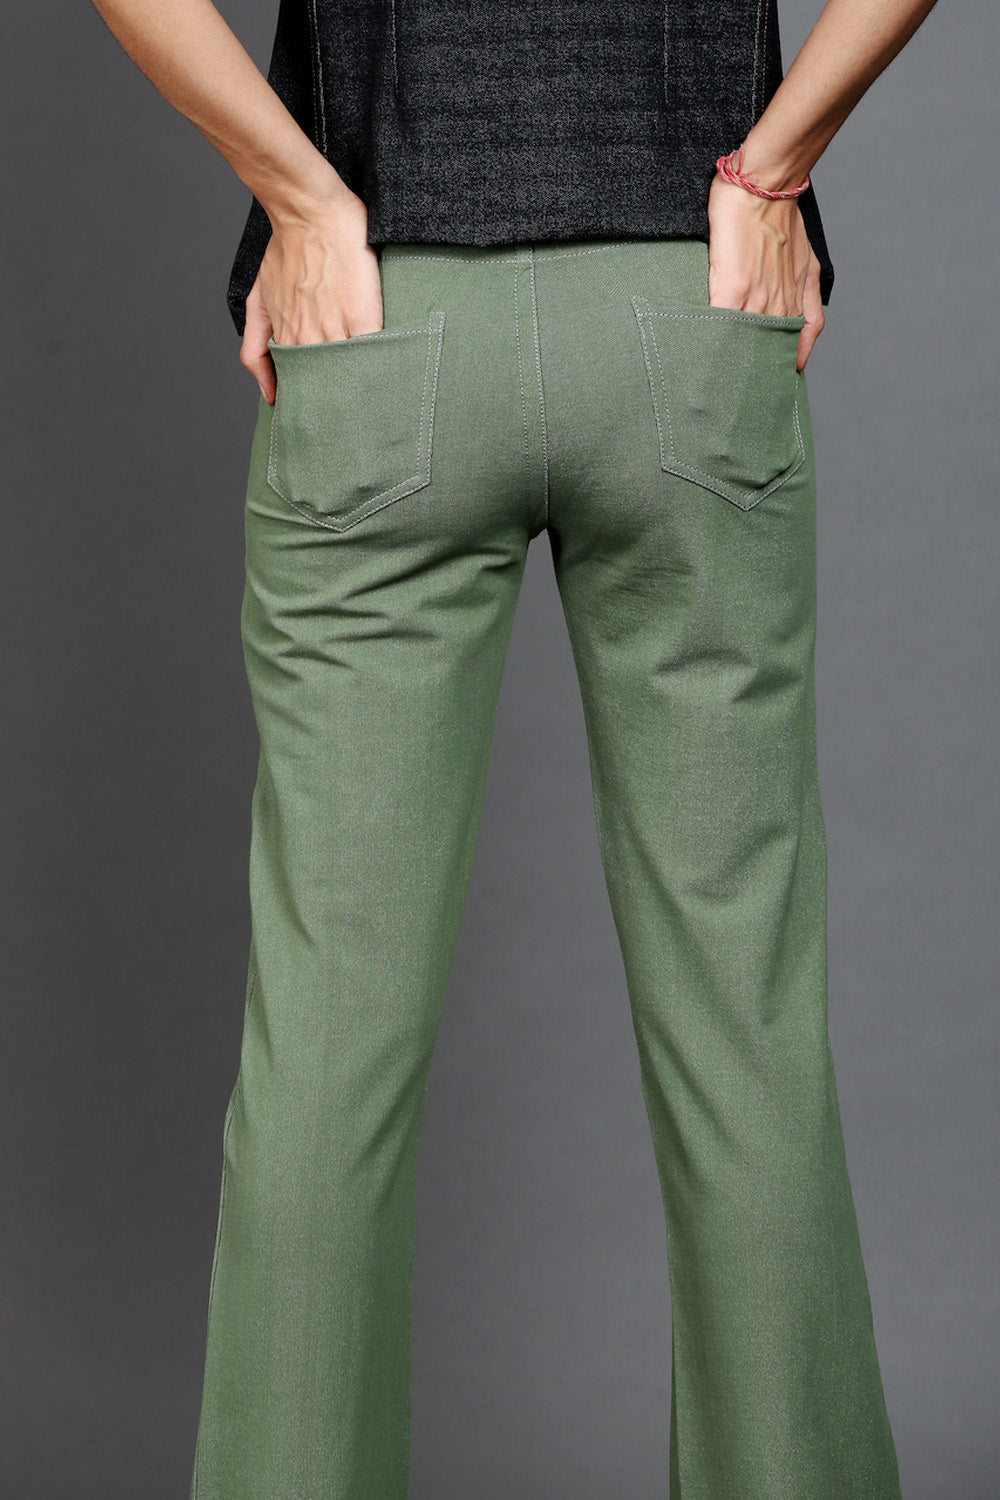 Sage Green Denim Look Trousers